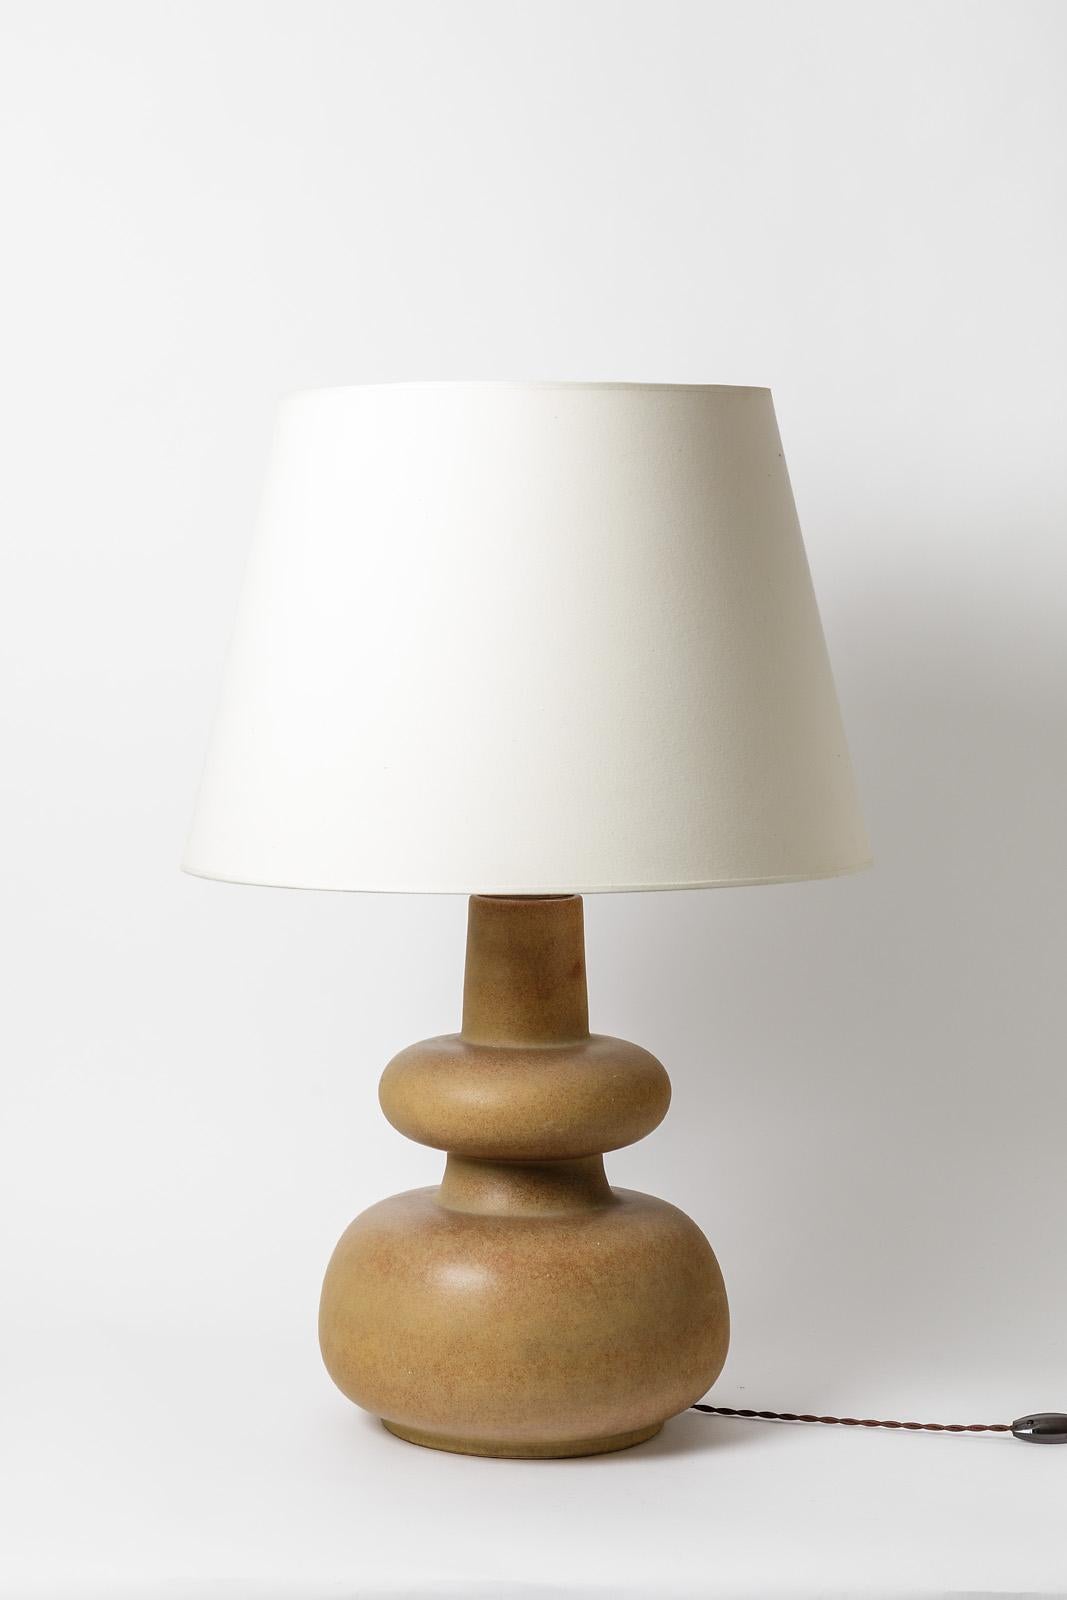 French Ceramic Table Lamp Mid Century Design circa 1970 (20. Jahrhundert)